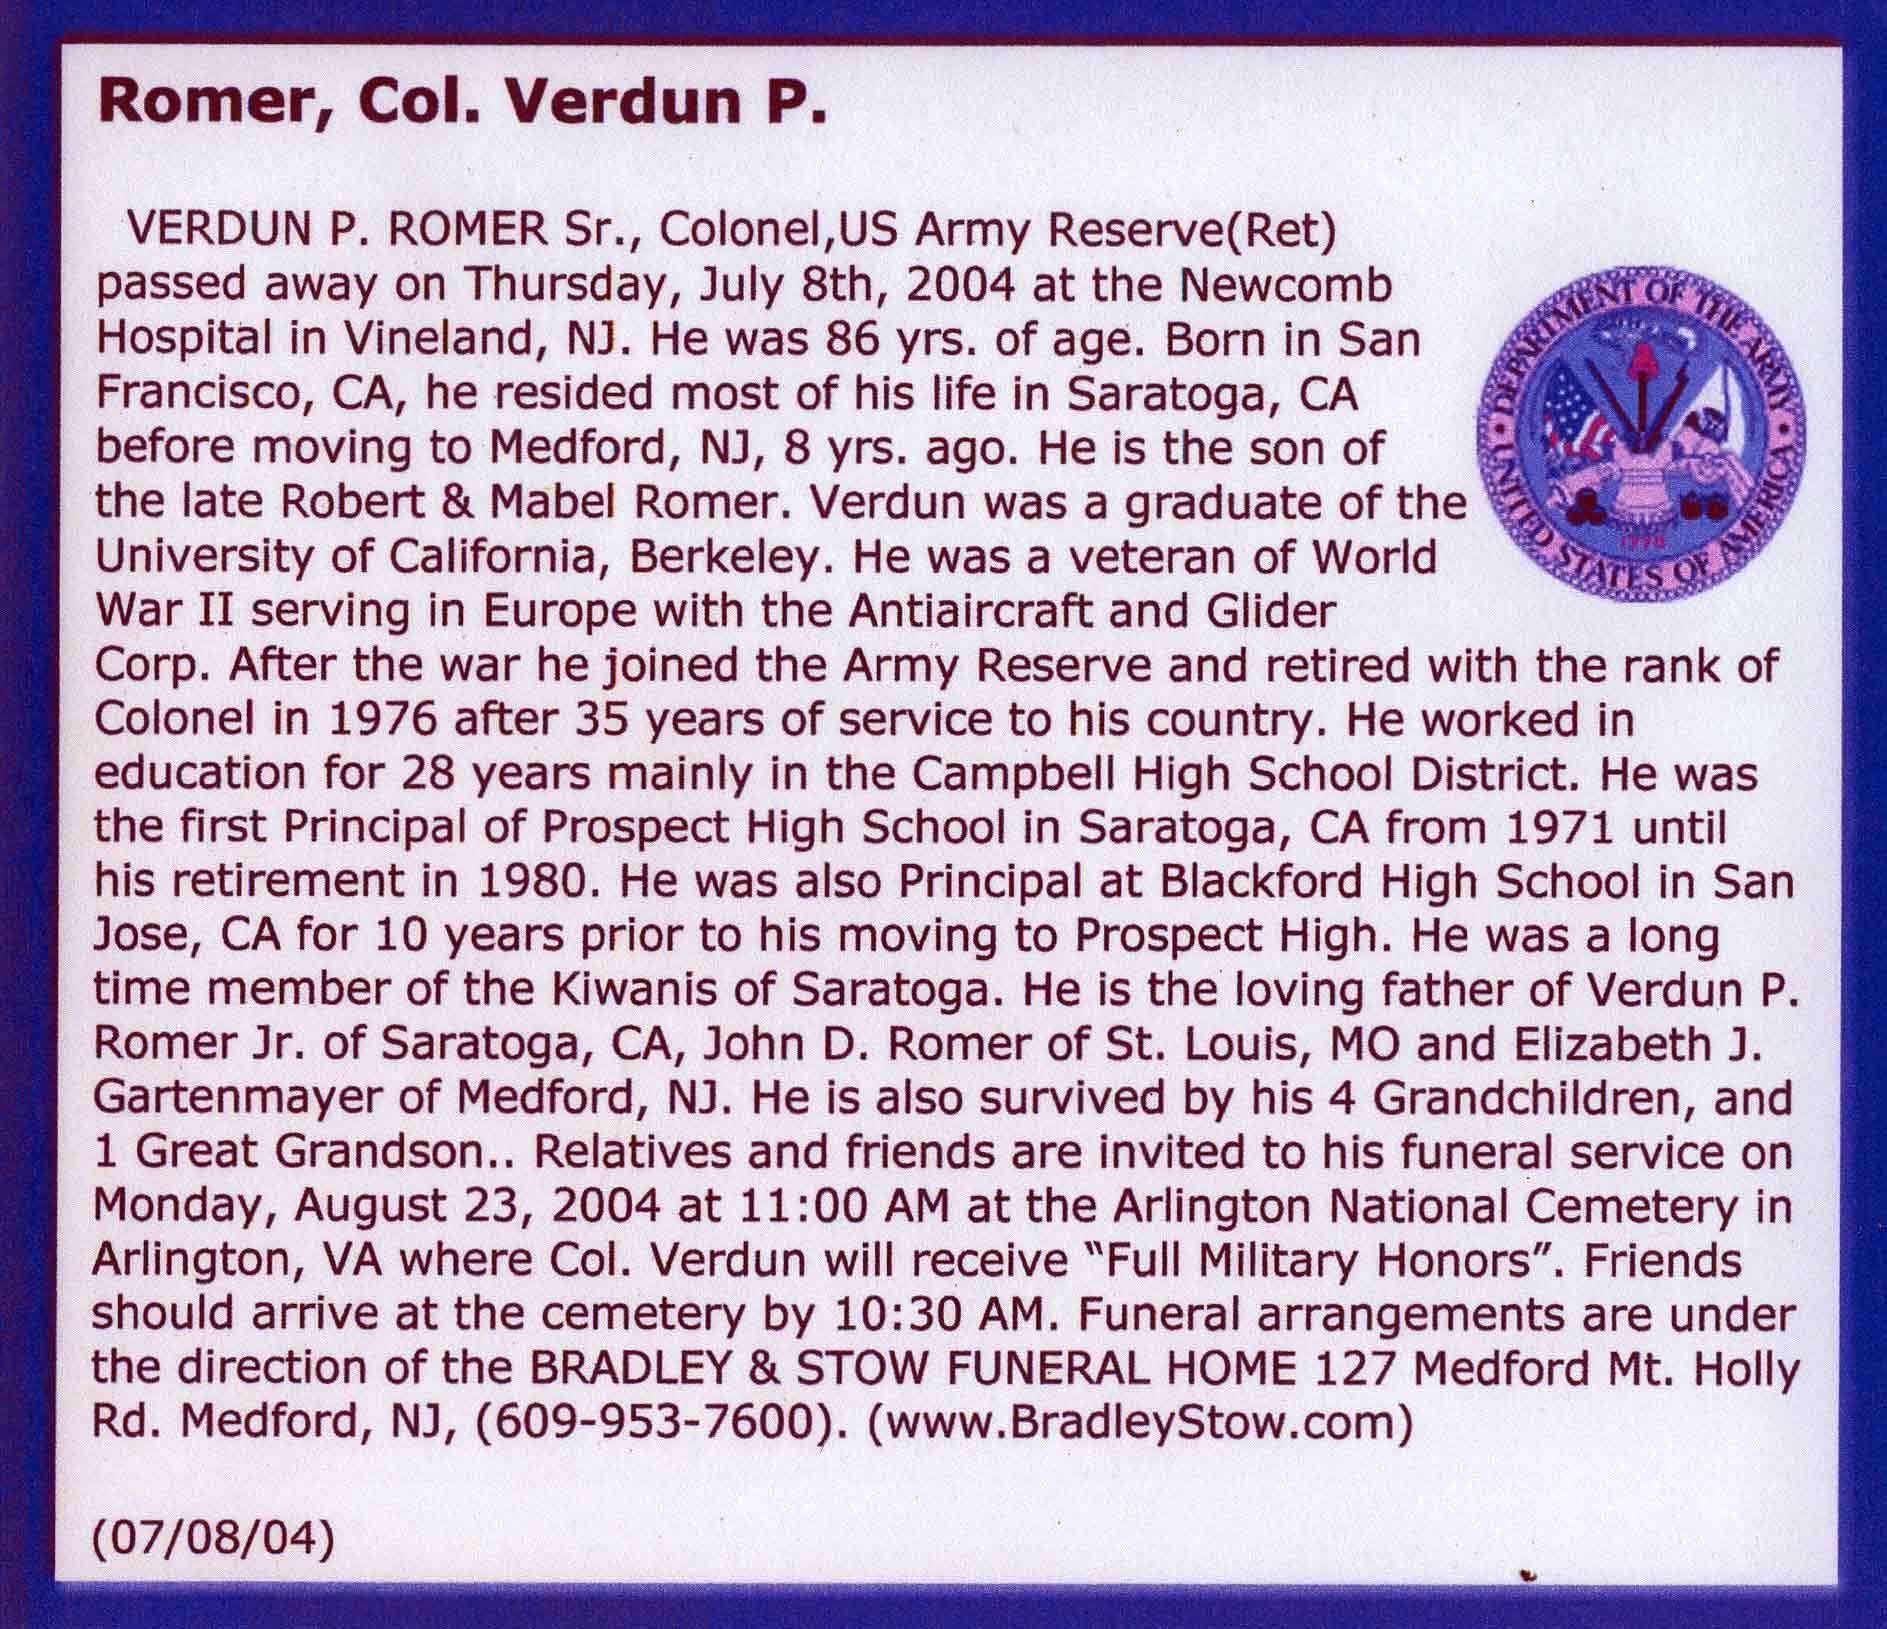 Picture of the obituary for Colonel Verdun P. Romer